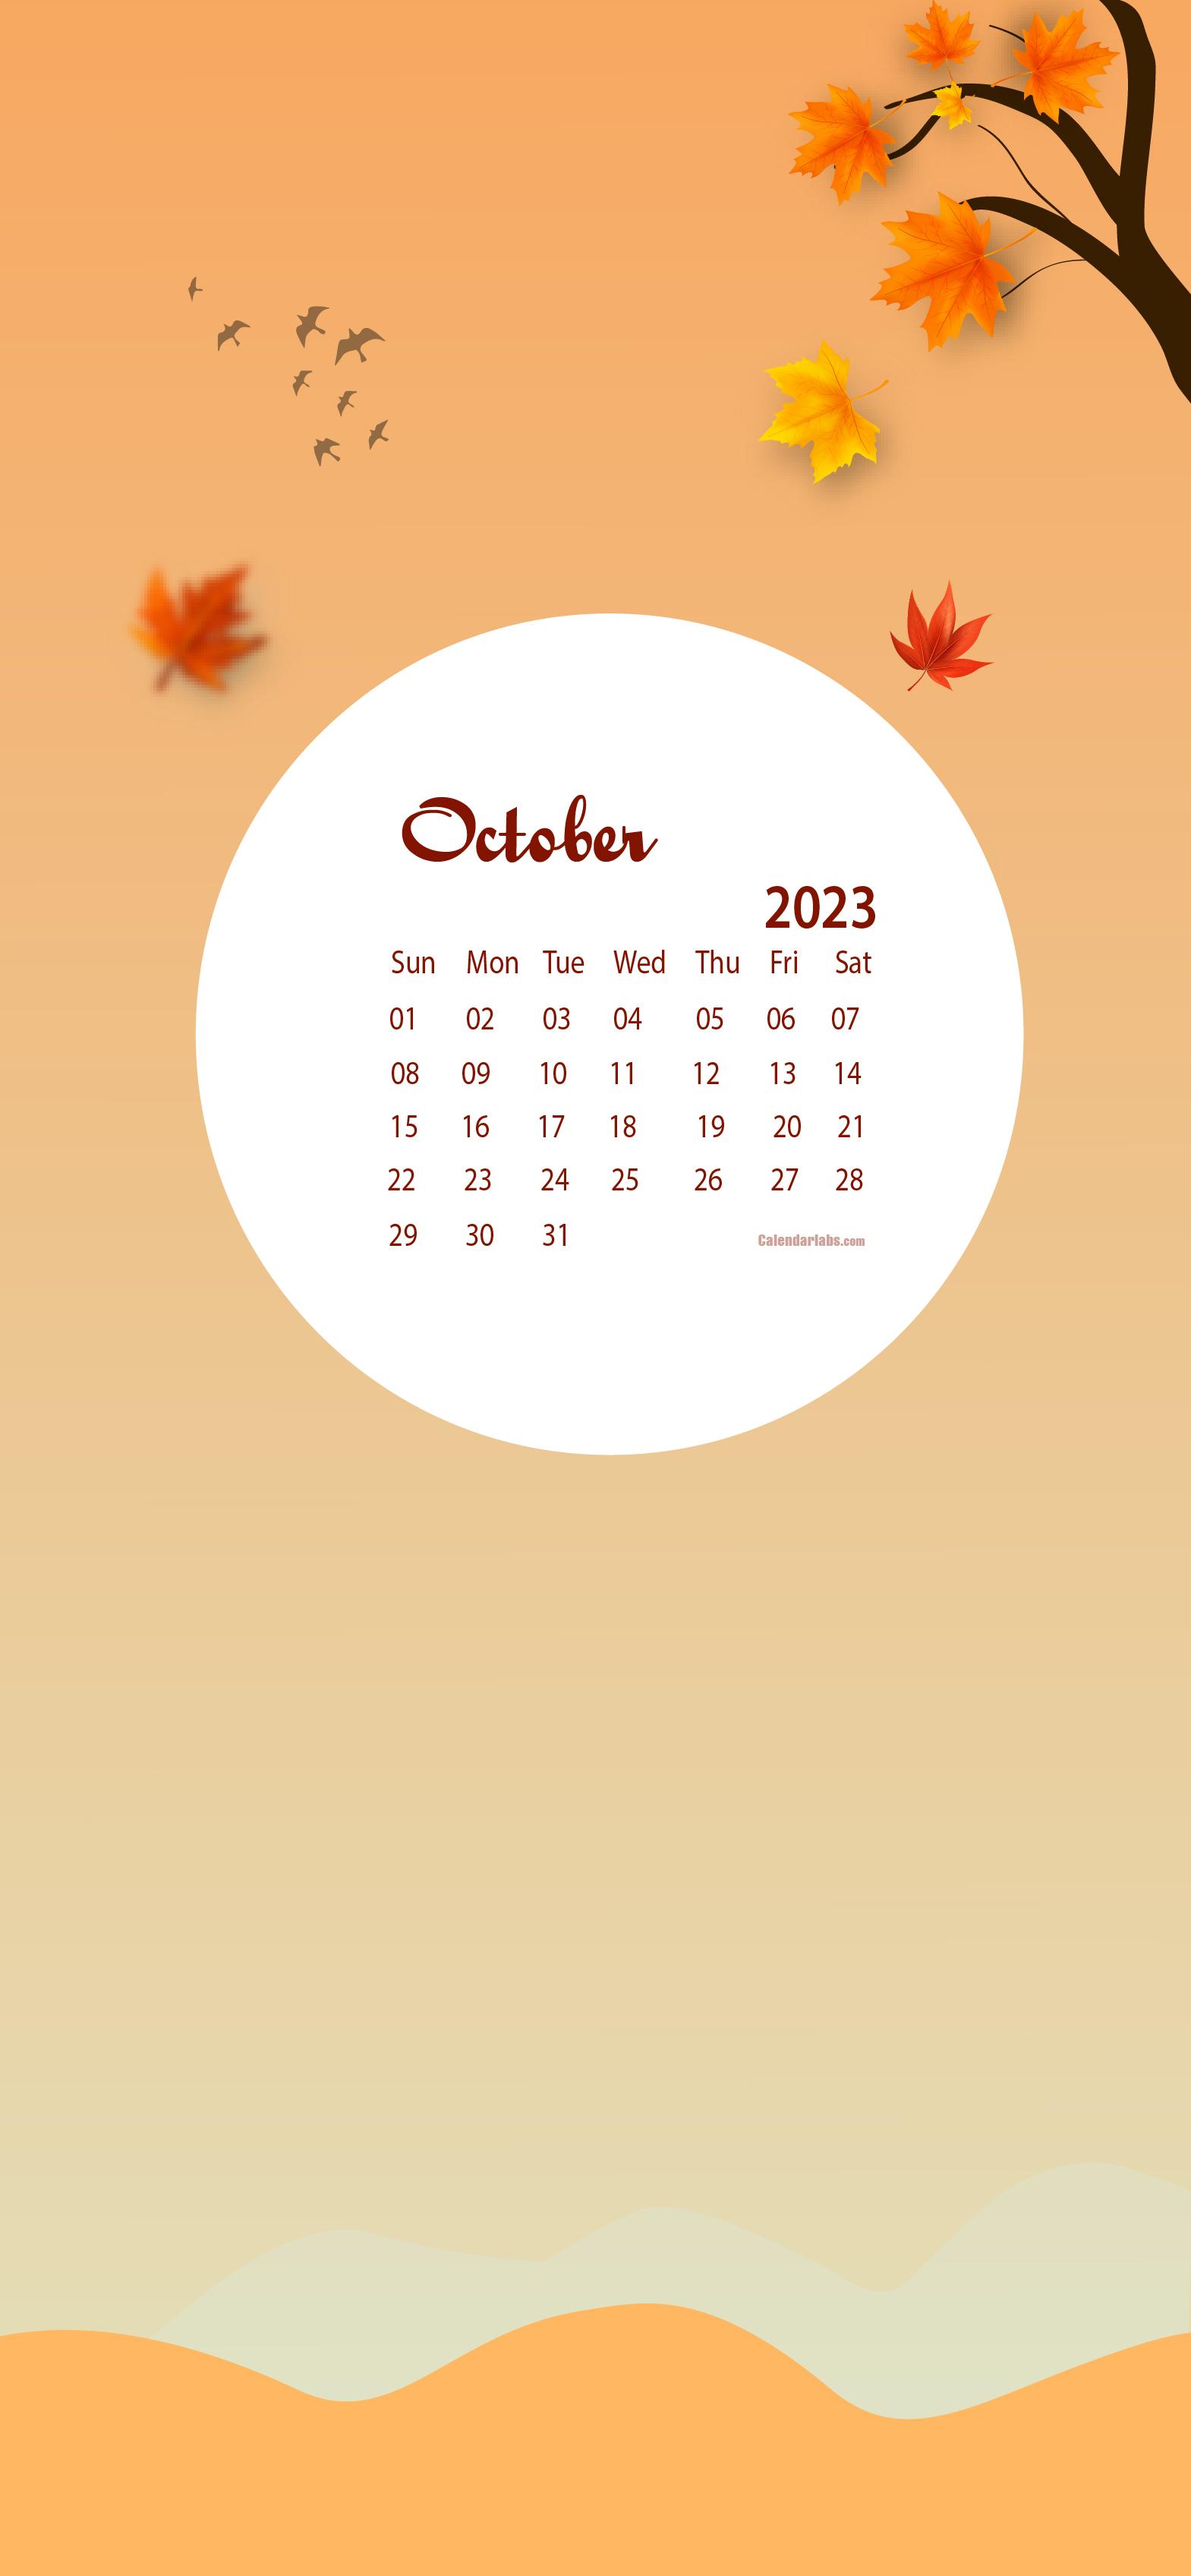 Free download October 2023 Desktop Wallpaper Calendar CalendarLabs